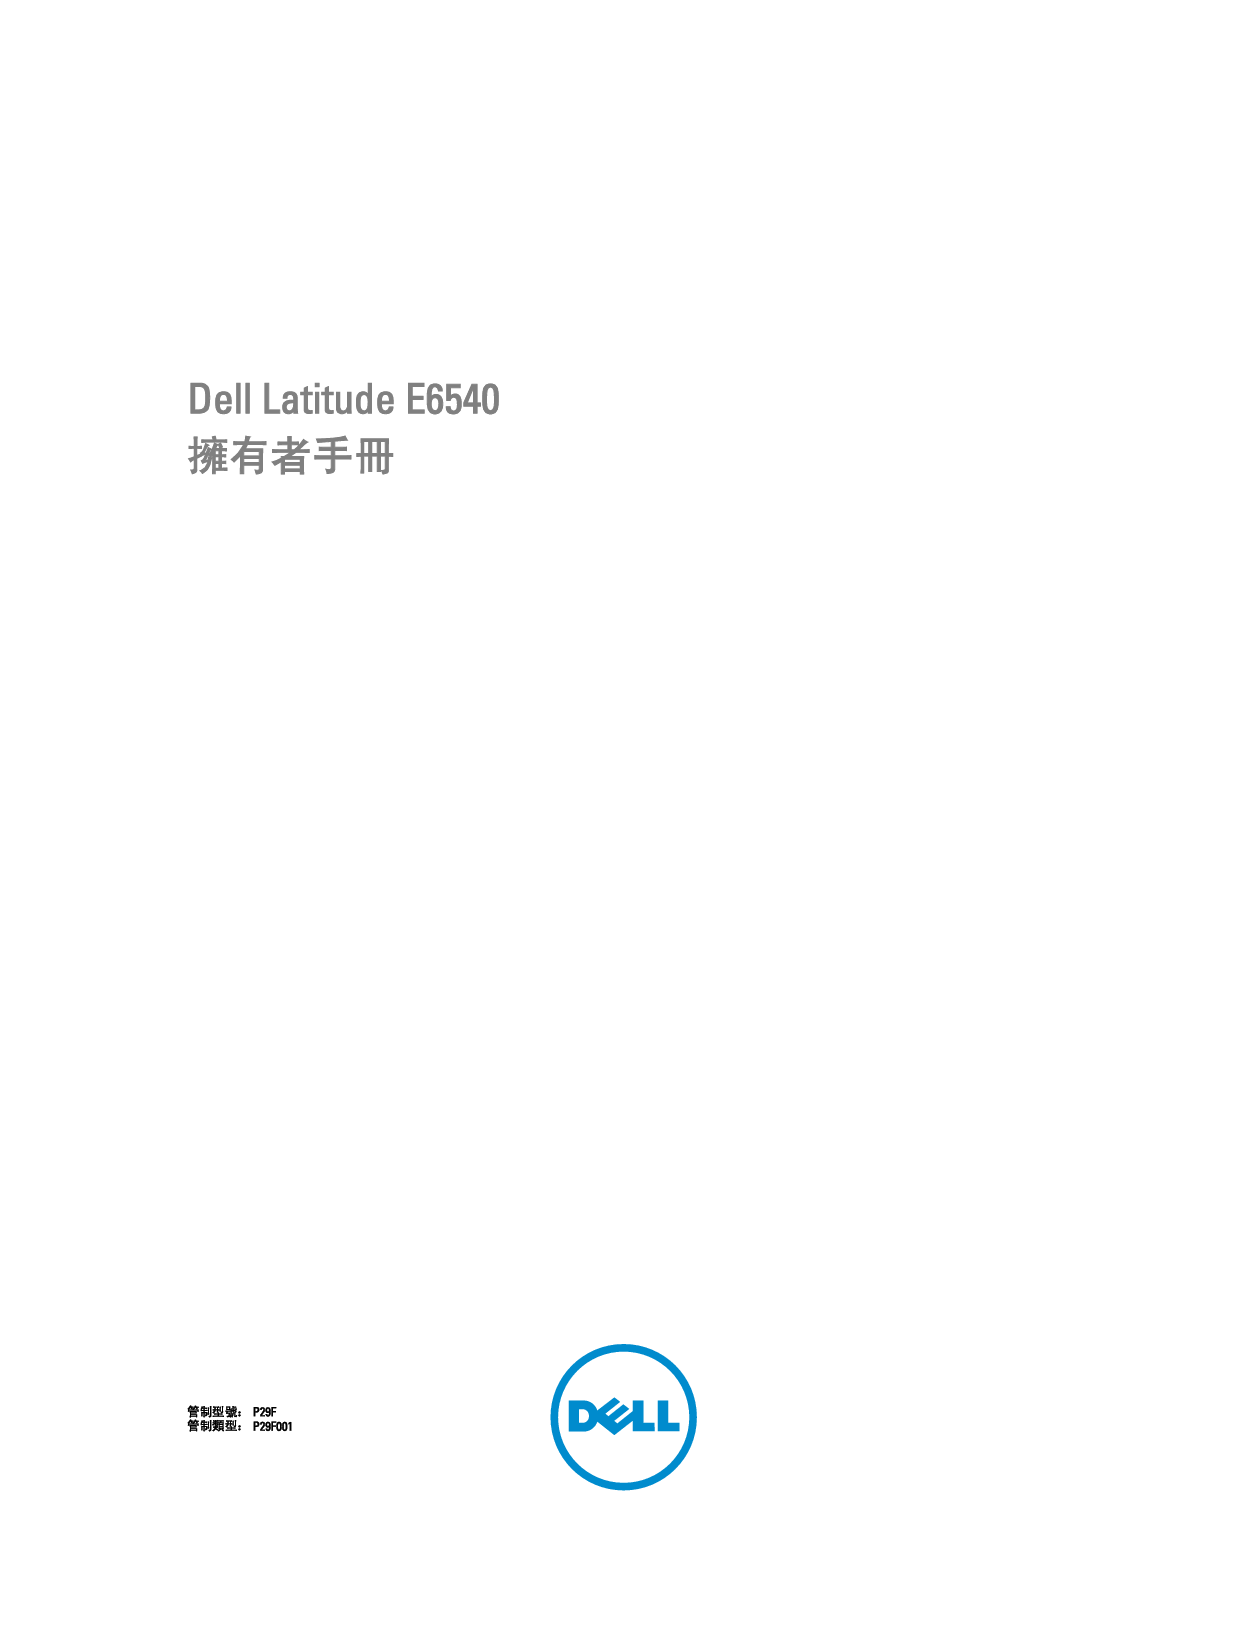 戴尔 Dell Latitude E6540 繁体 用户手册 封面